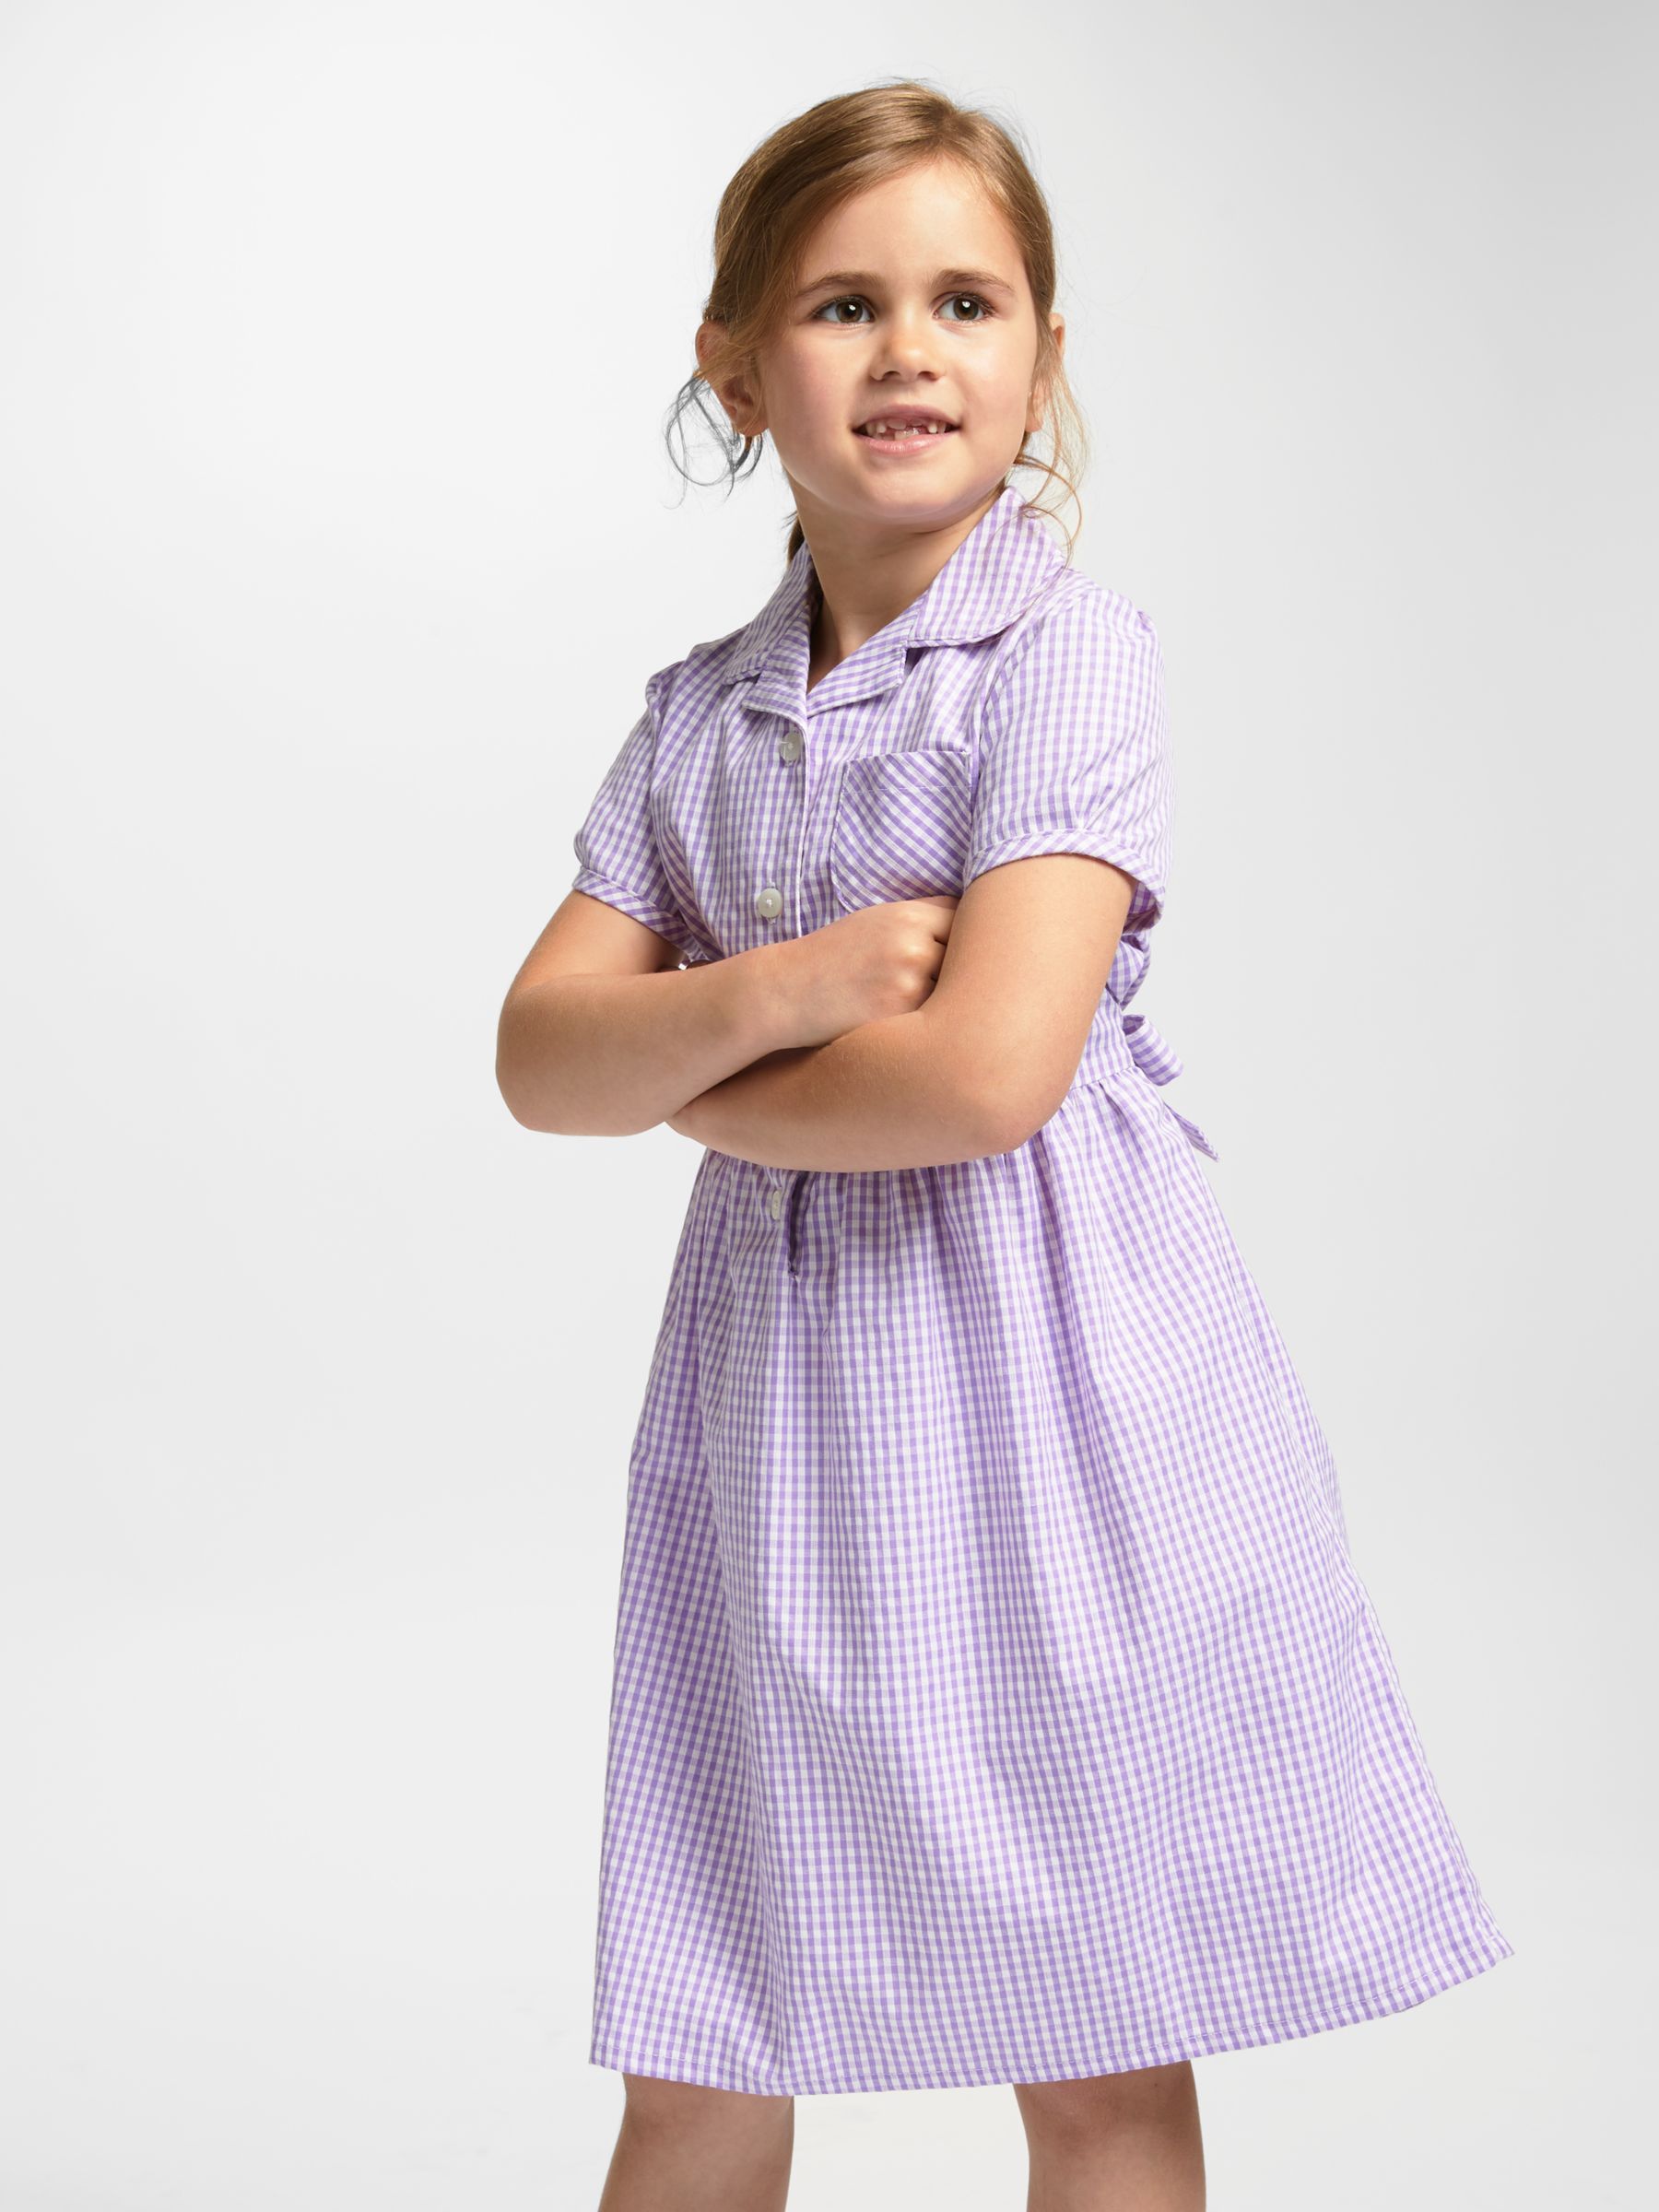 lilac summer school dress